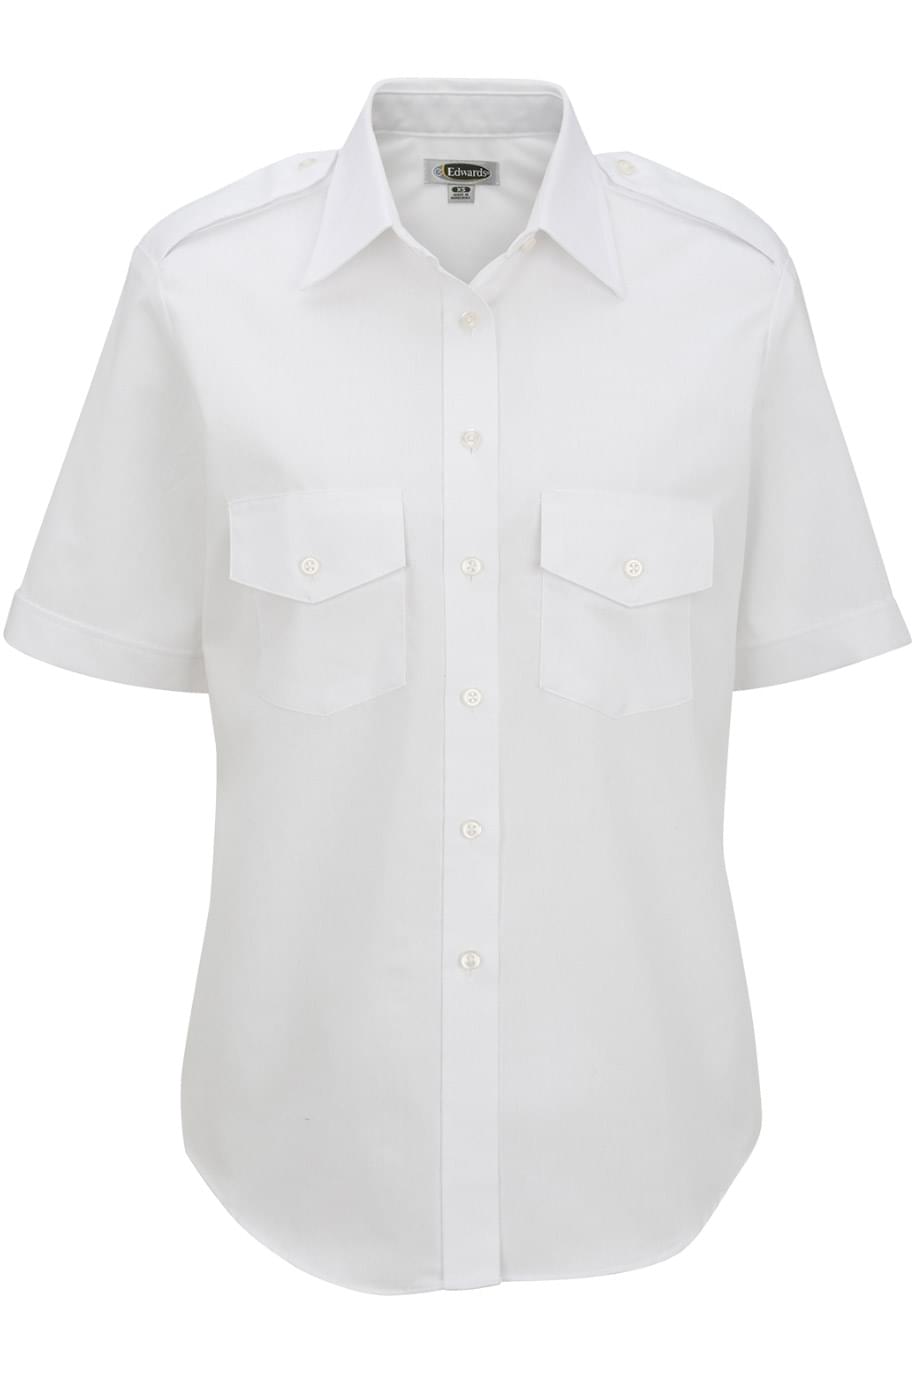 Edwards Garment 5212 - W Short Sleeve Navigator